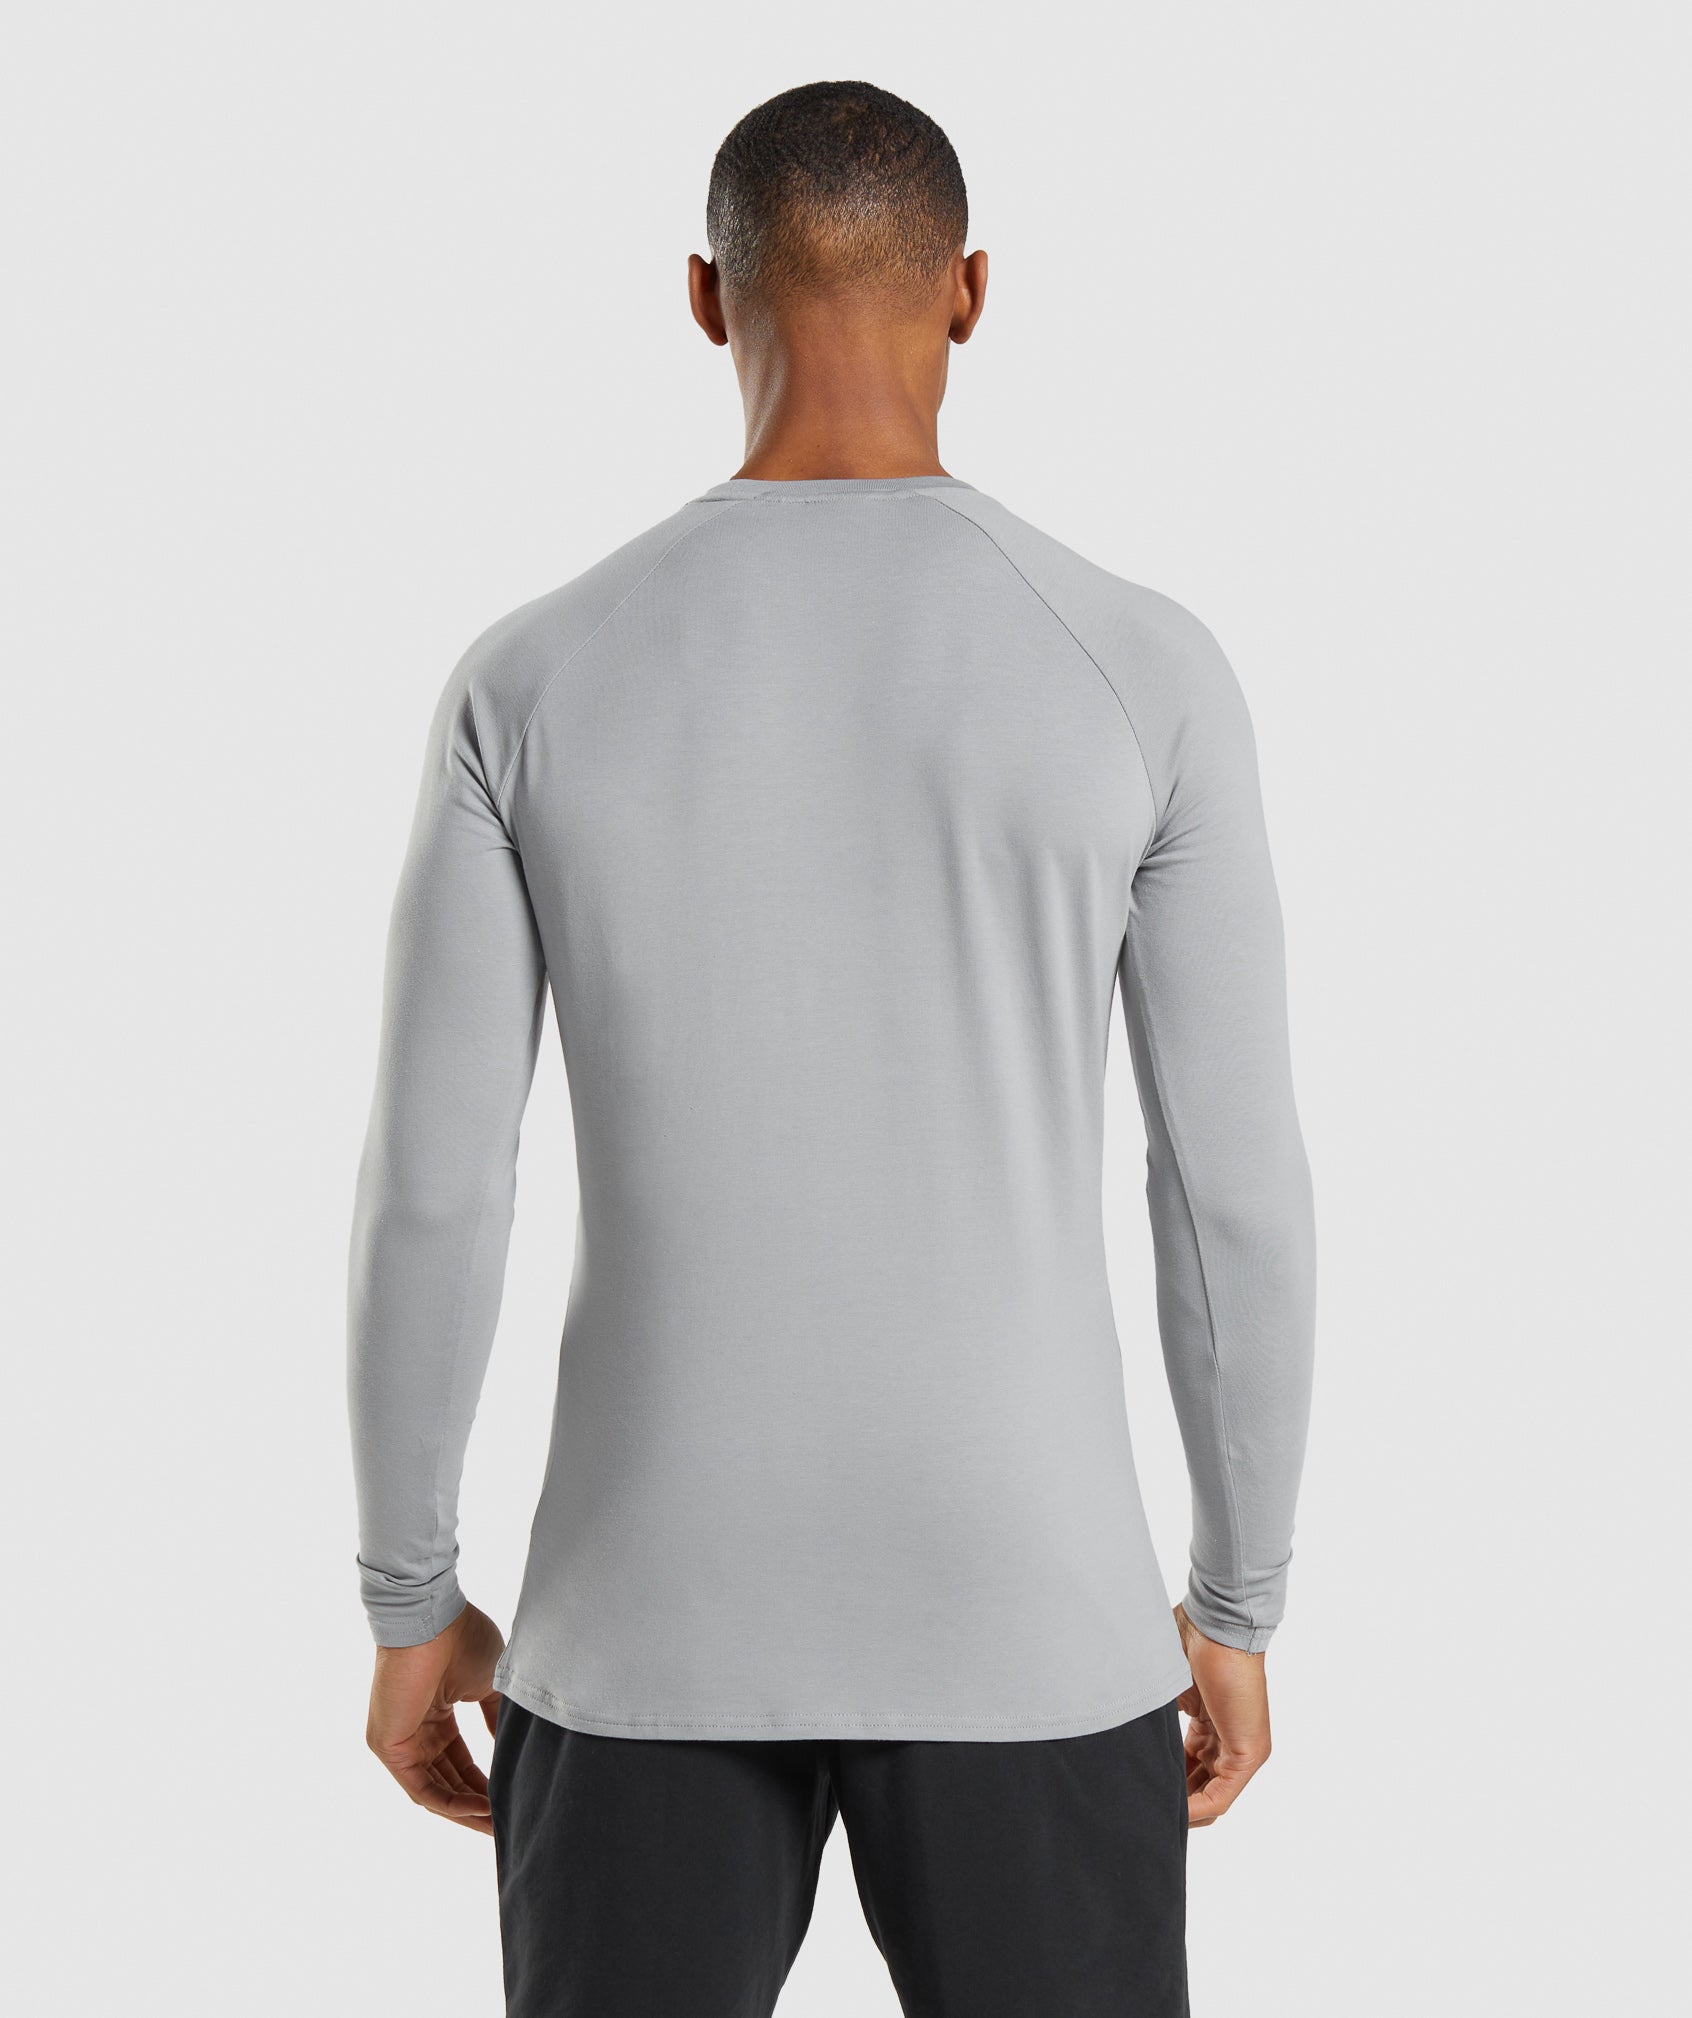 Apollo Long Sleeve T-Shirt in Smokey Grey - view 2